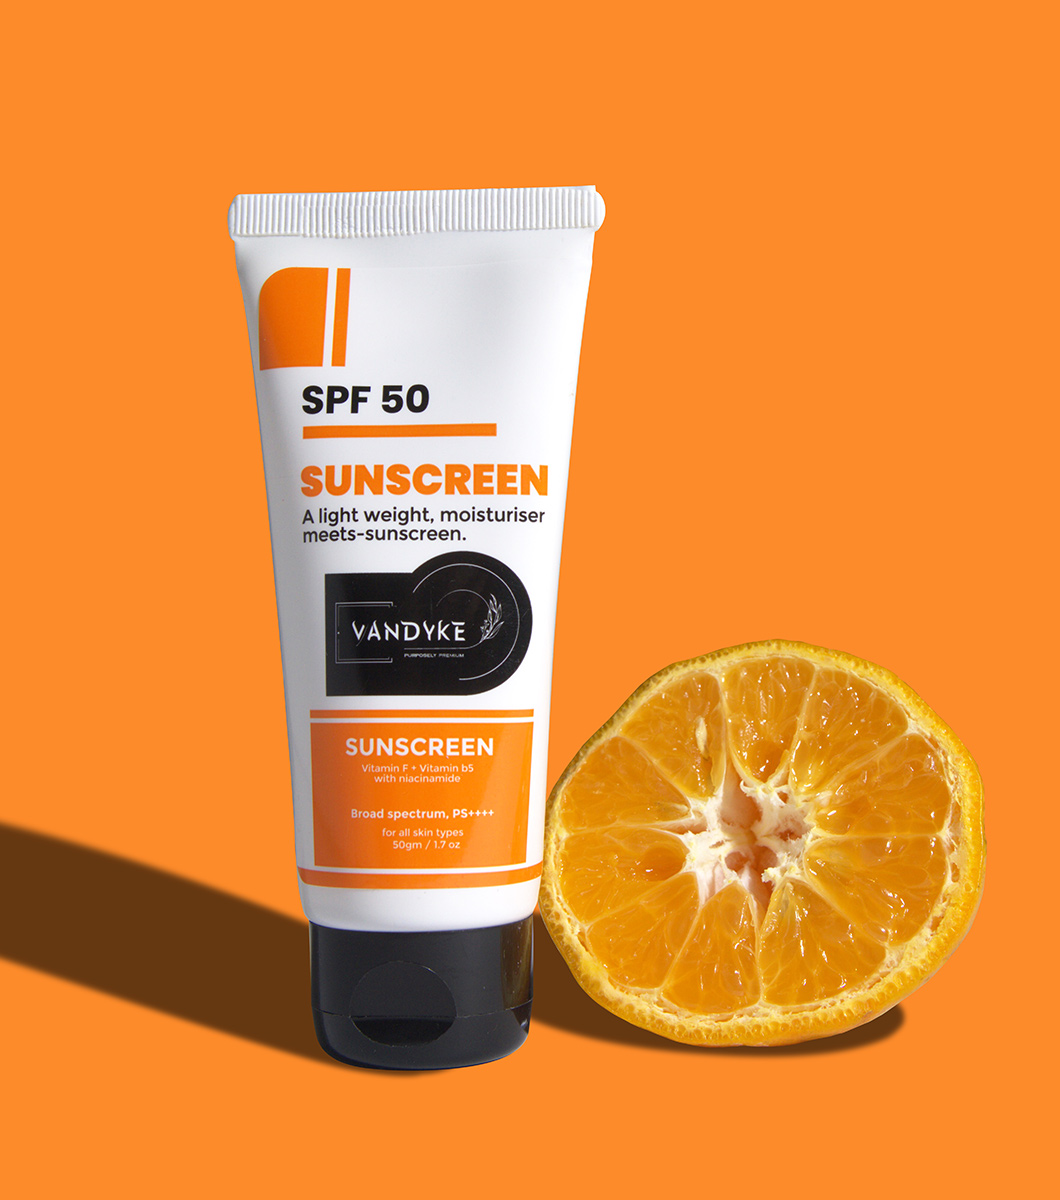 SPF 50 Sunscreen - Vandyke